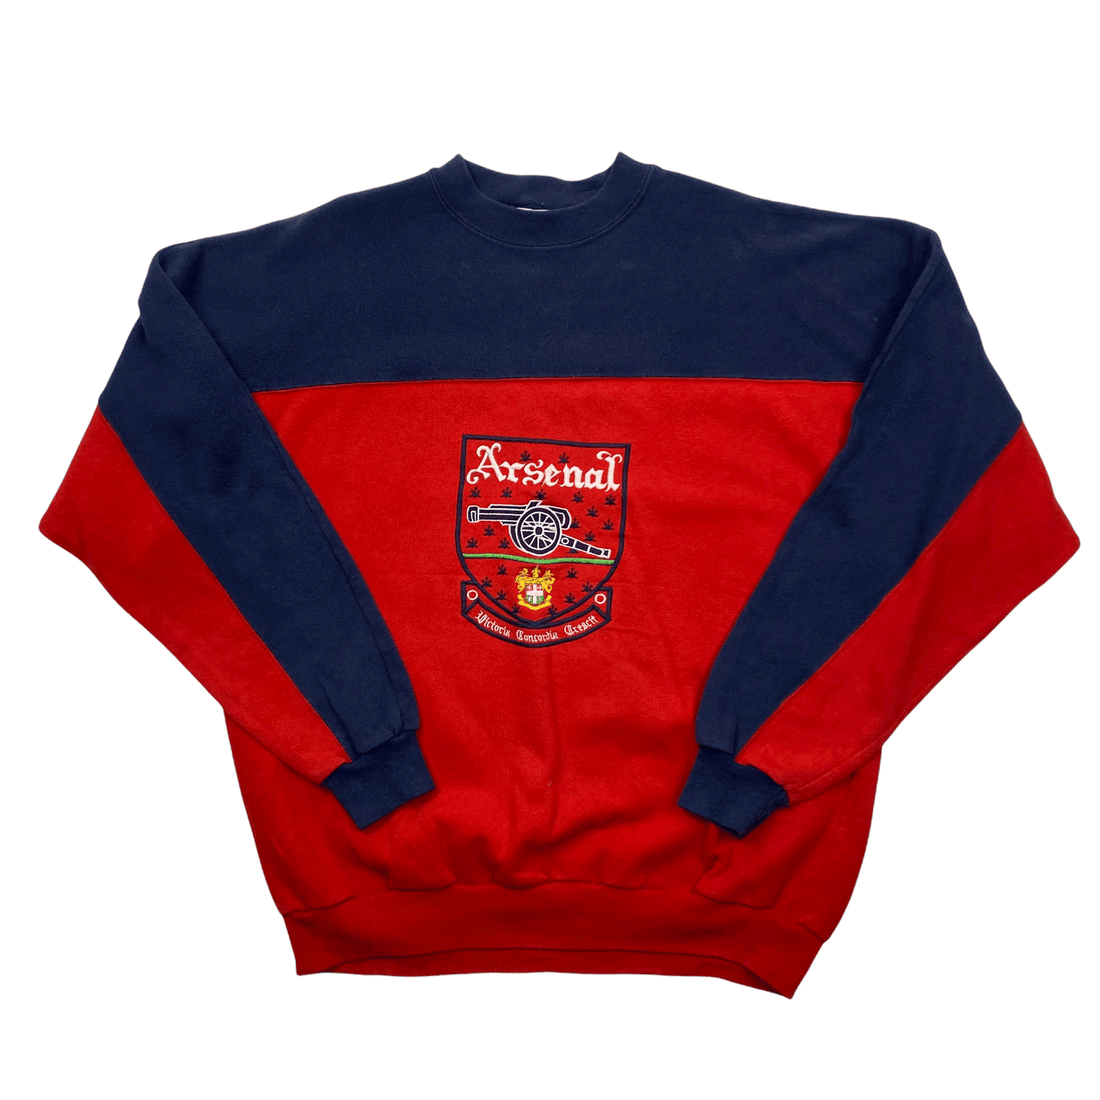 Vintage 90s Navy Blue + Red Adidas Arsenal Football Spell-Out Sweatshirt - Medium - The Streetwear Studio